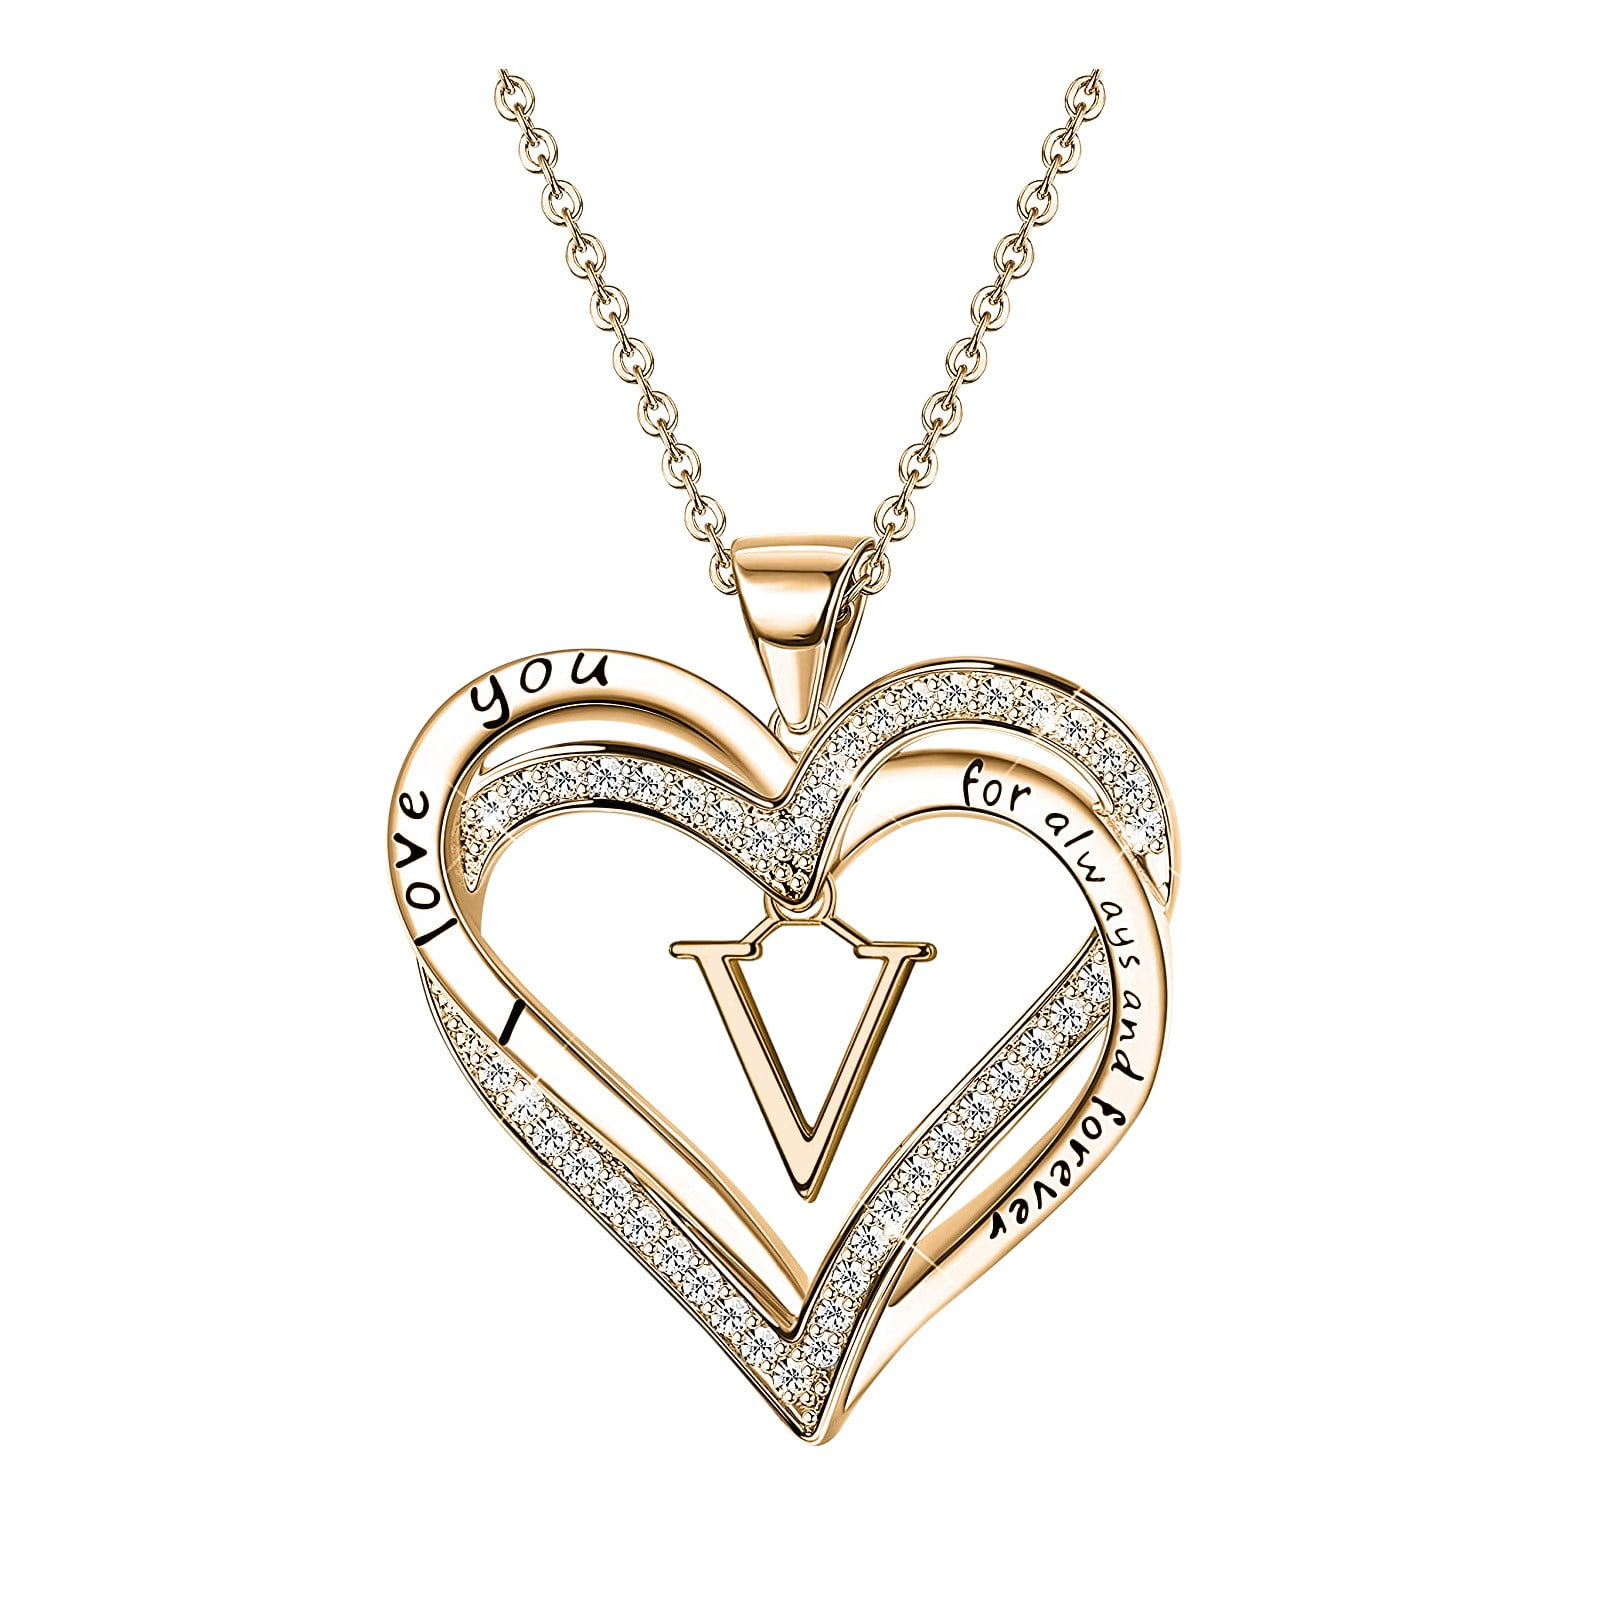 Letter necklace - Heart necklace - Gold letter necklace - Initial necklace  - Letter necklaces - Romantic necklace - Heart necklaces